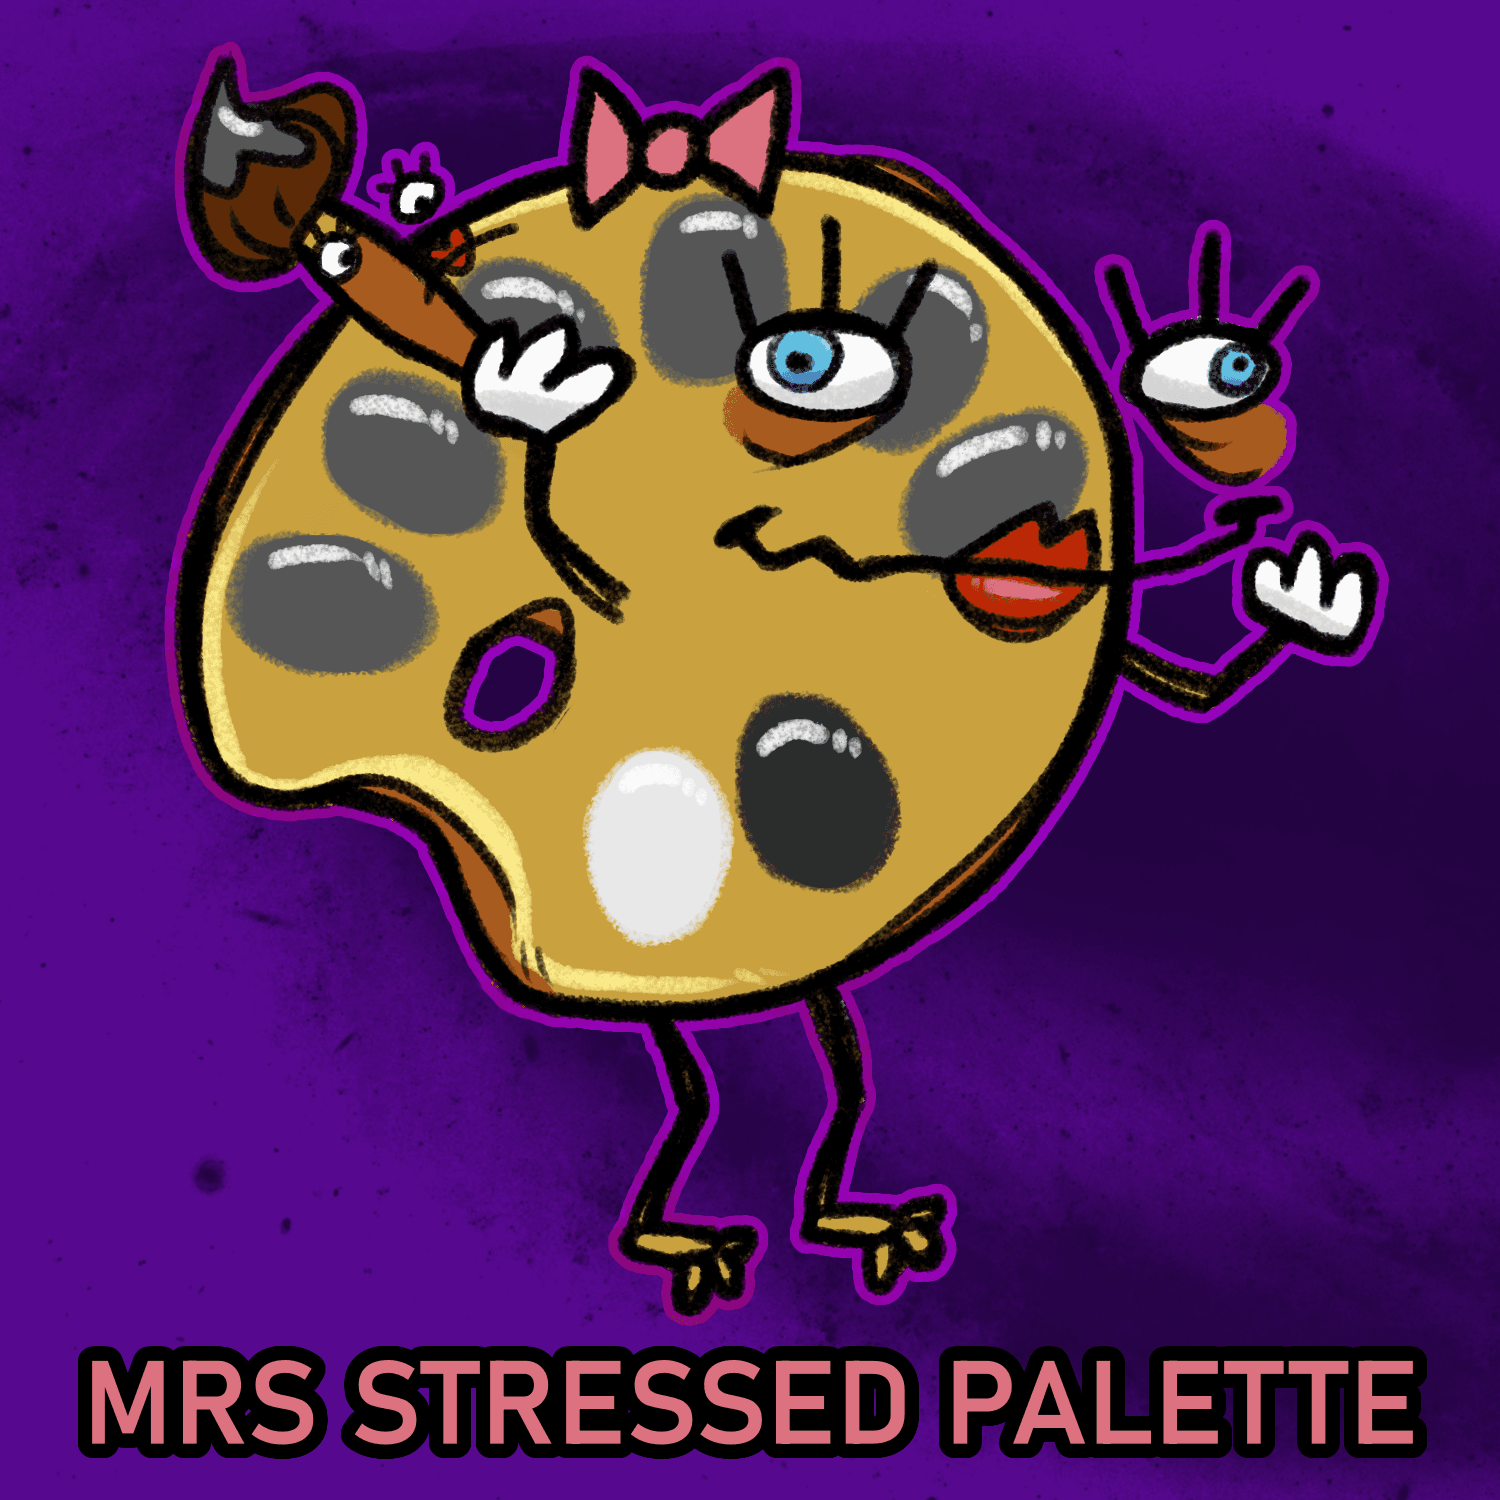 MRS STRESSED PALETTE